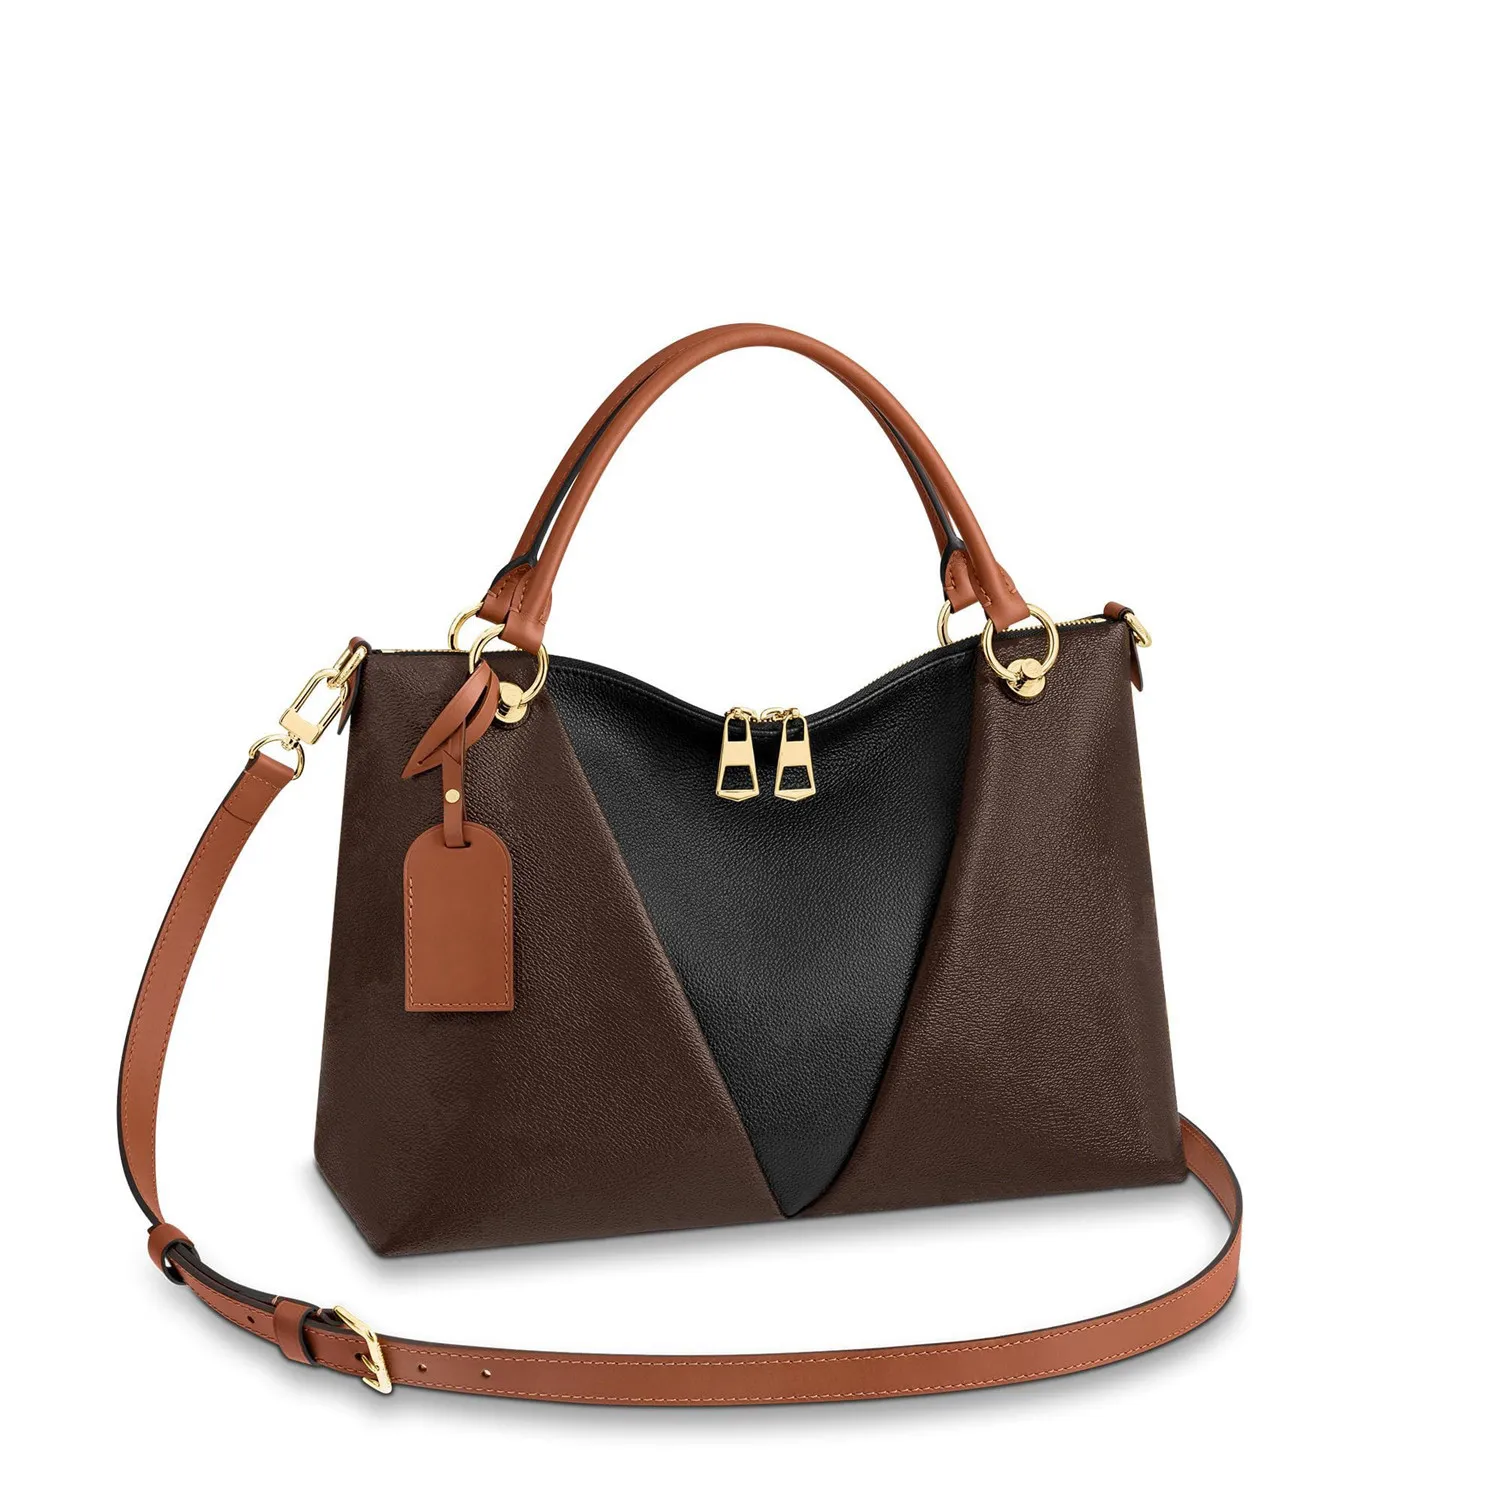 Handbag Tote Bag Large Totes Handbag totes Backpack Women Bag Purses Brown Bags Leather Clutch Fashion Wallet Bags 43948 MM/BB CP0167